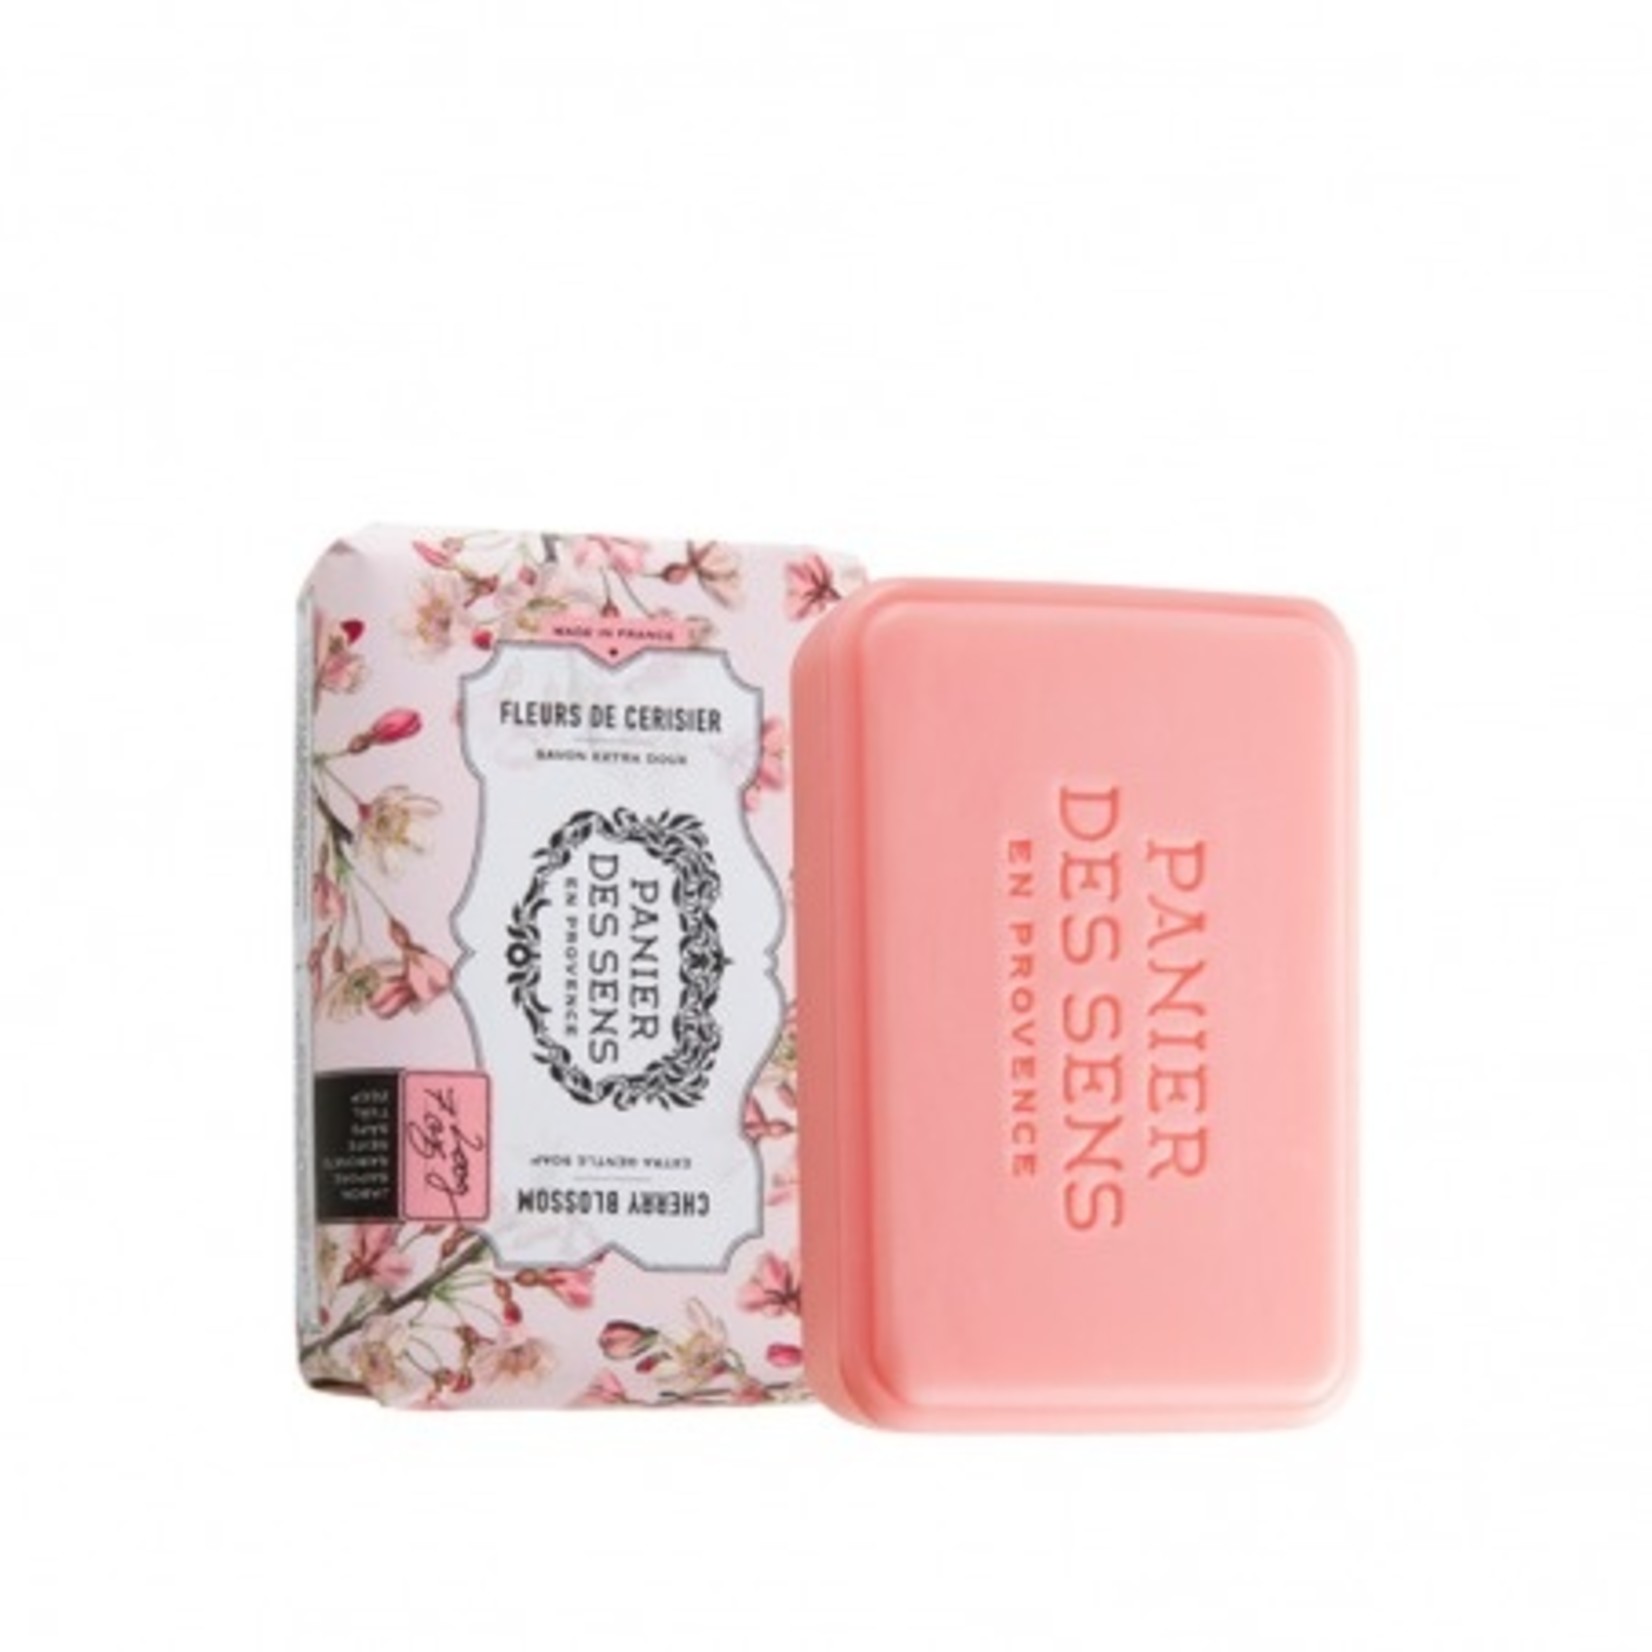 Panier des Sens Extra Gentle Soap (Sheabutter)  - Cherry Blossom